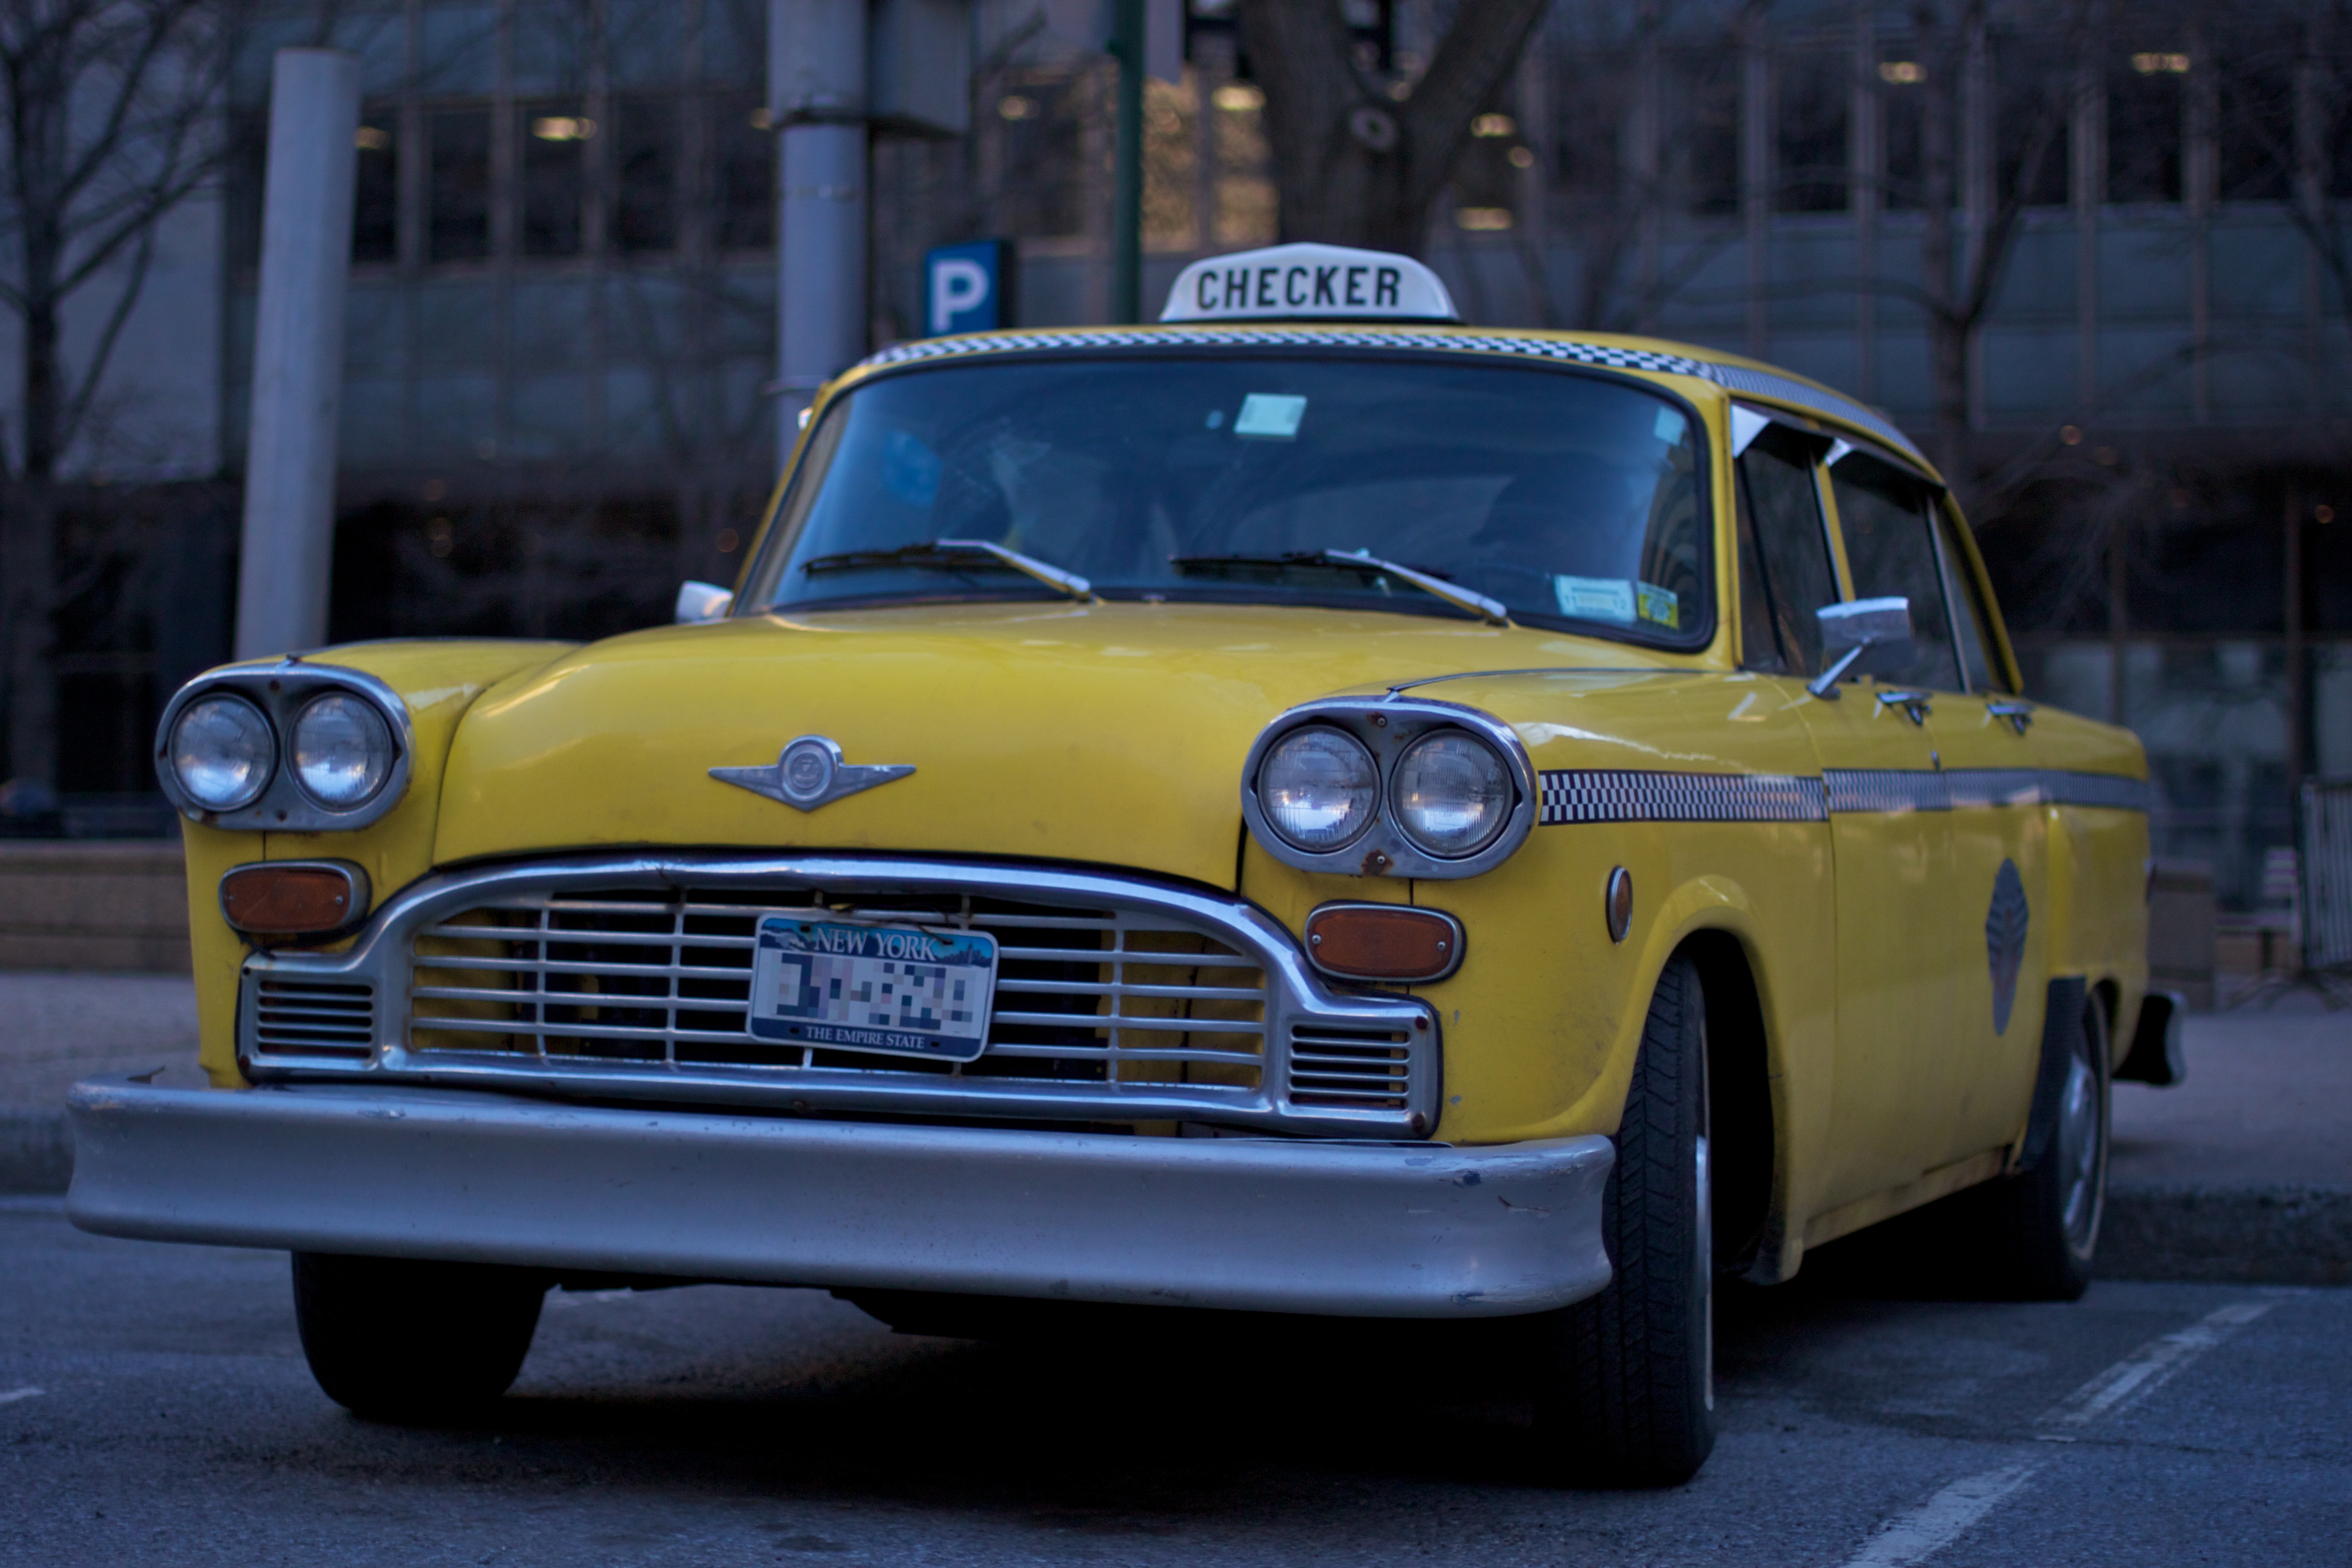 Checker Taxi Cab | Flickr - Photo Sharing!